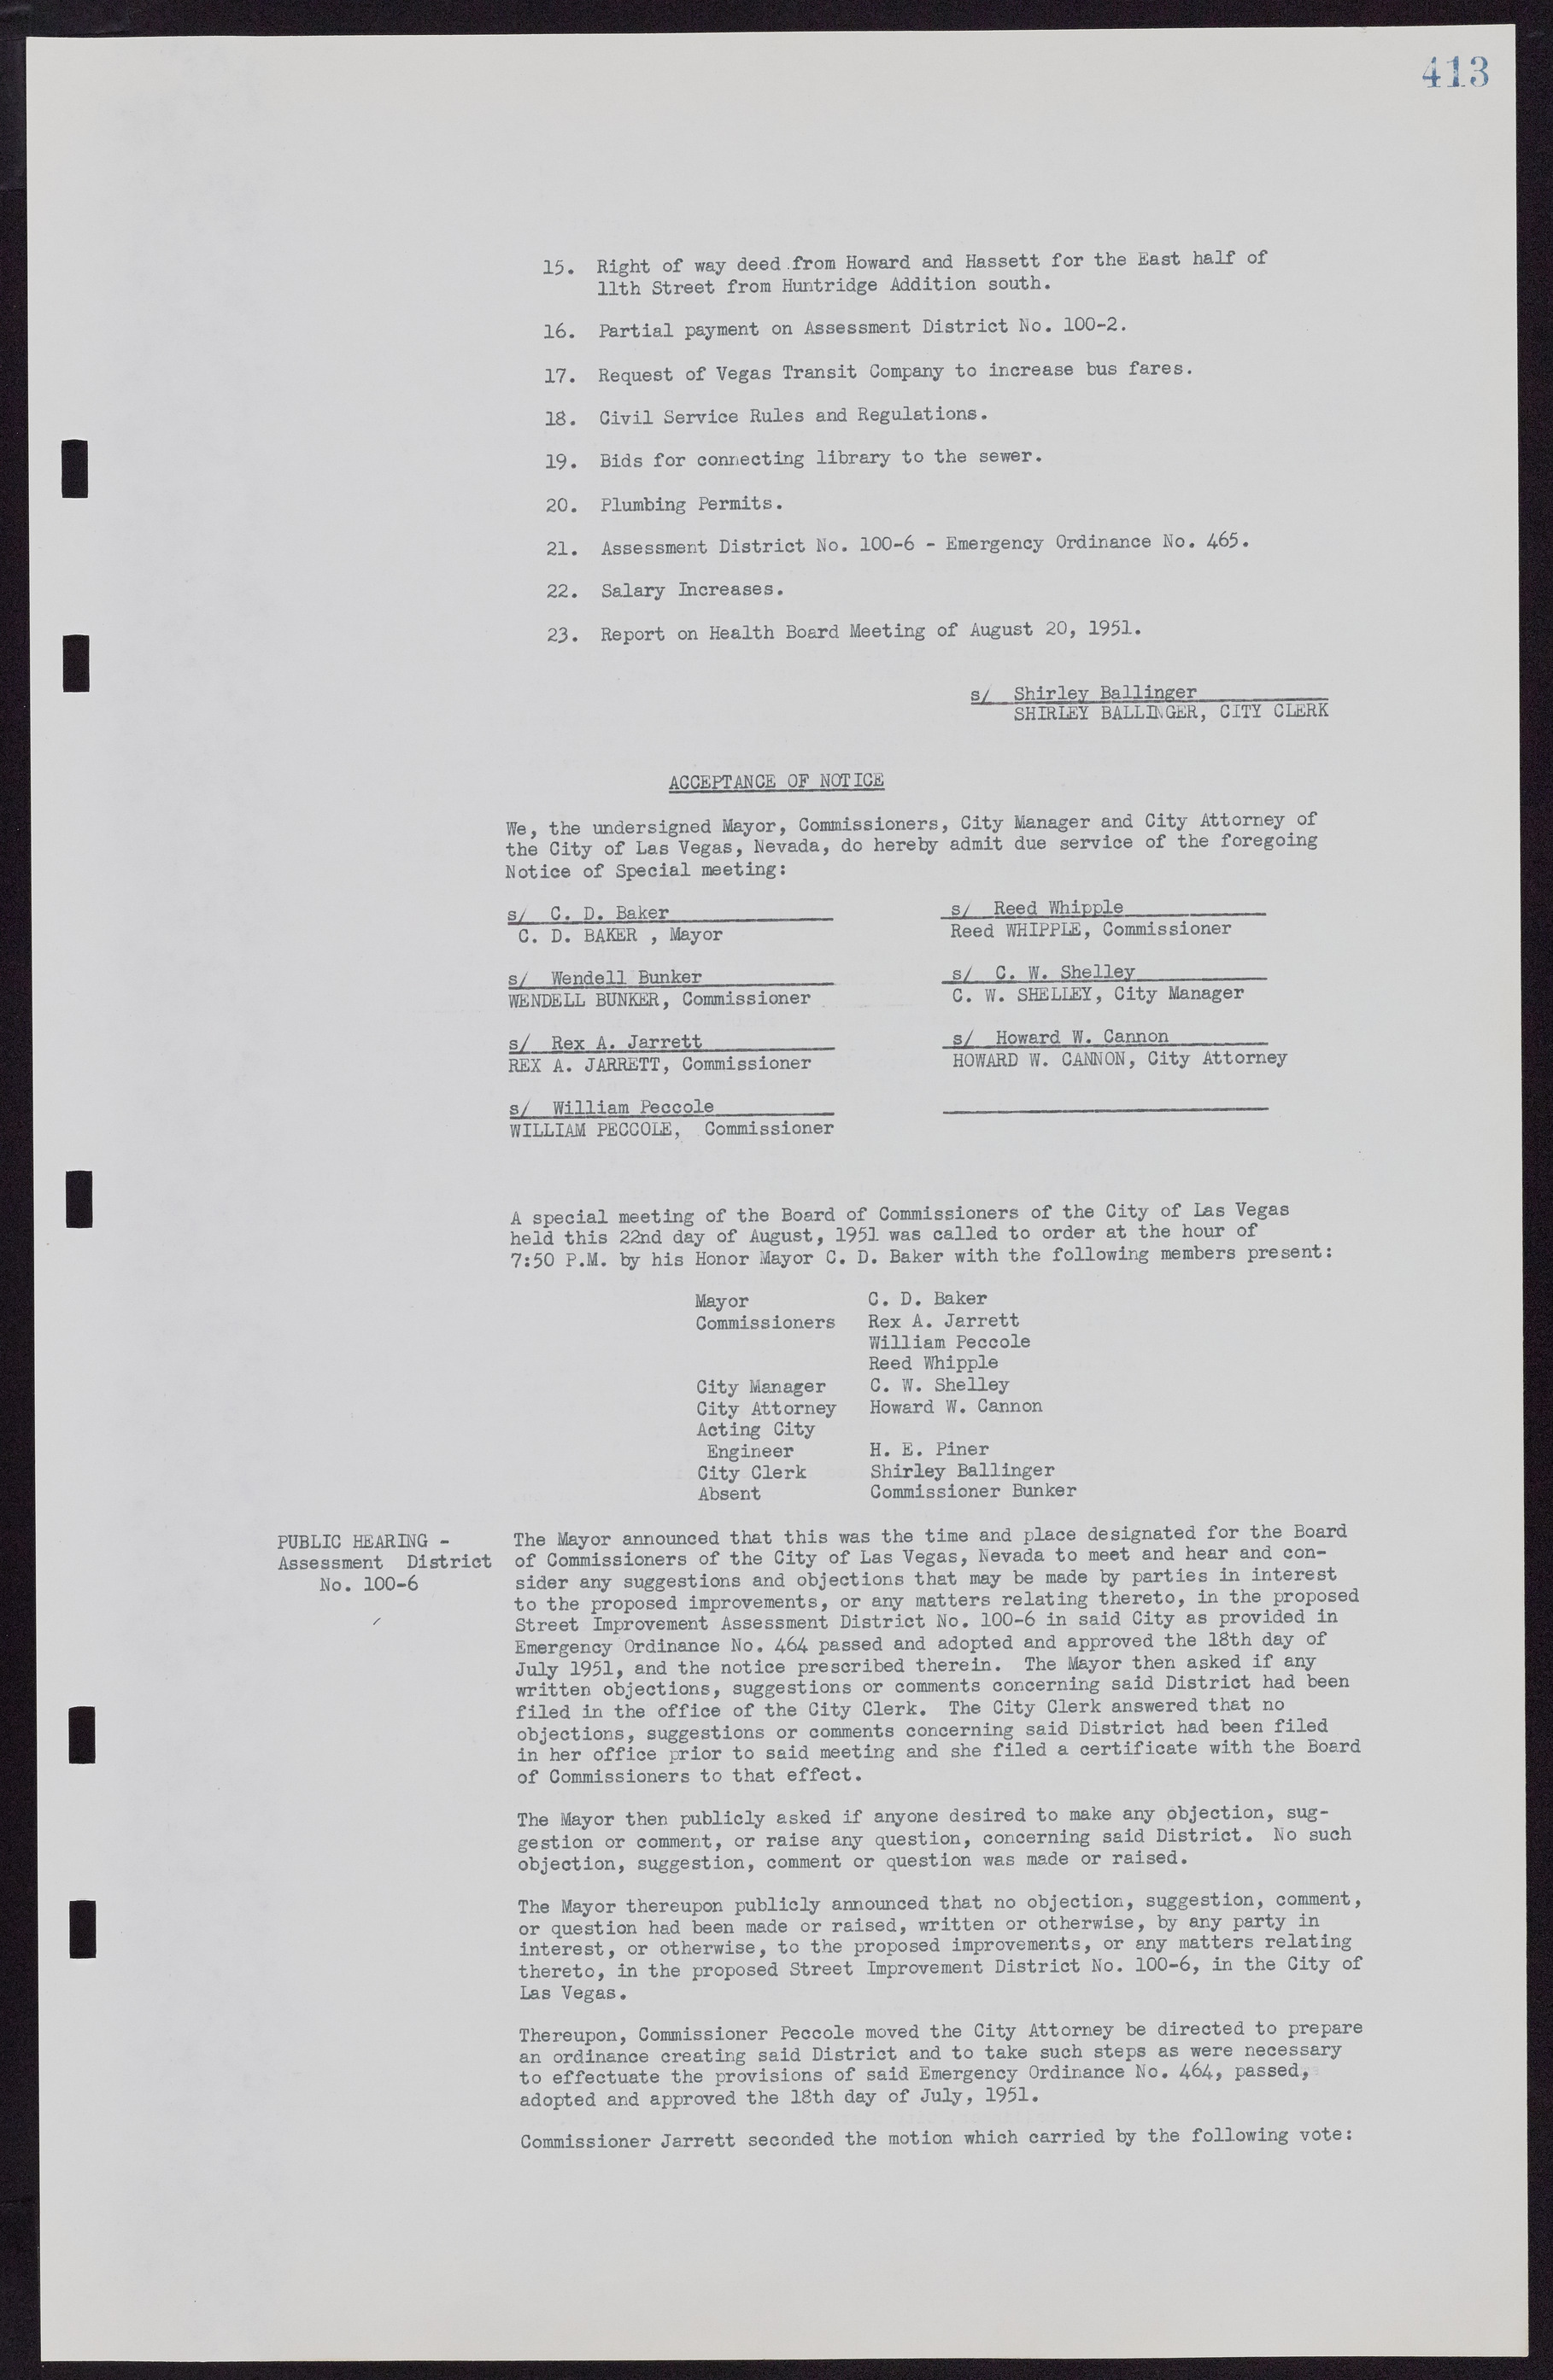 Las Vegas City Commission Minutes, November 7, 1949 to May 21, 1952, lvc000007-429